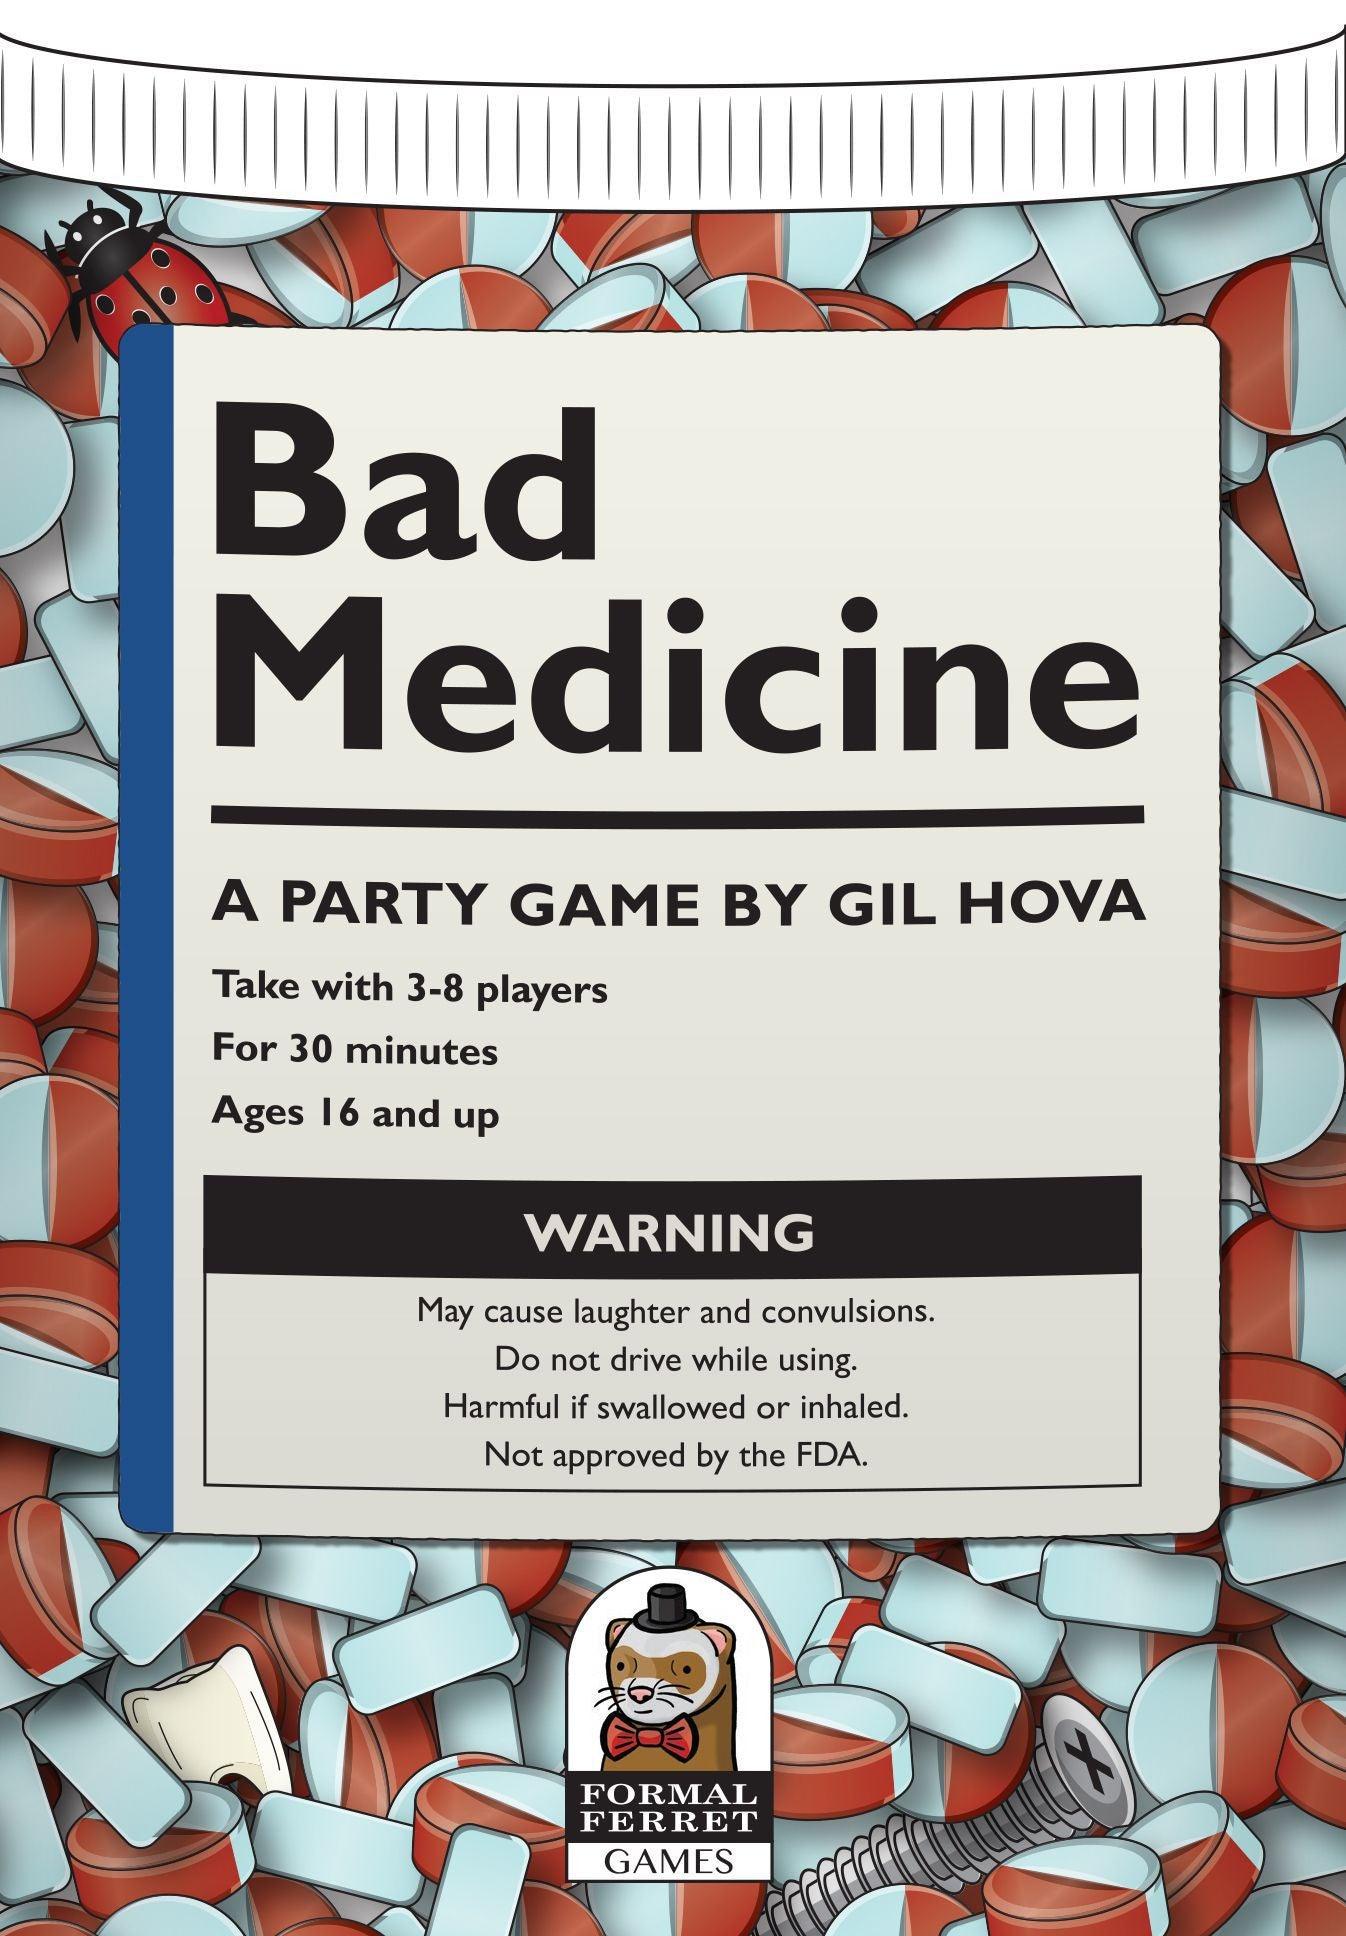 VR-60256 Bad Medicine - Formal Ferret Games - Titan Pop Culture